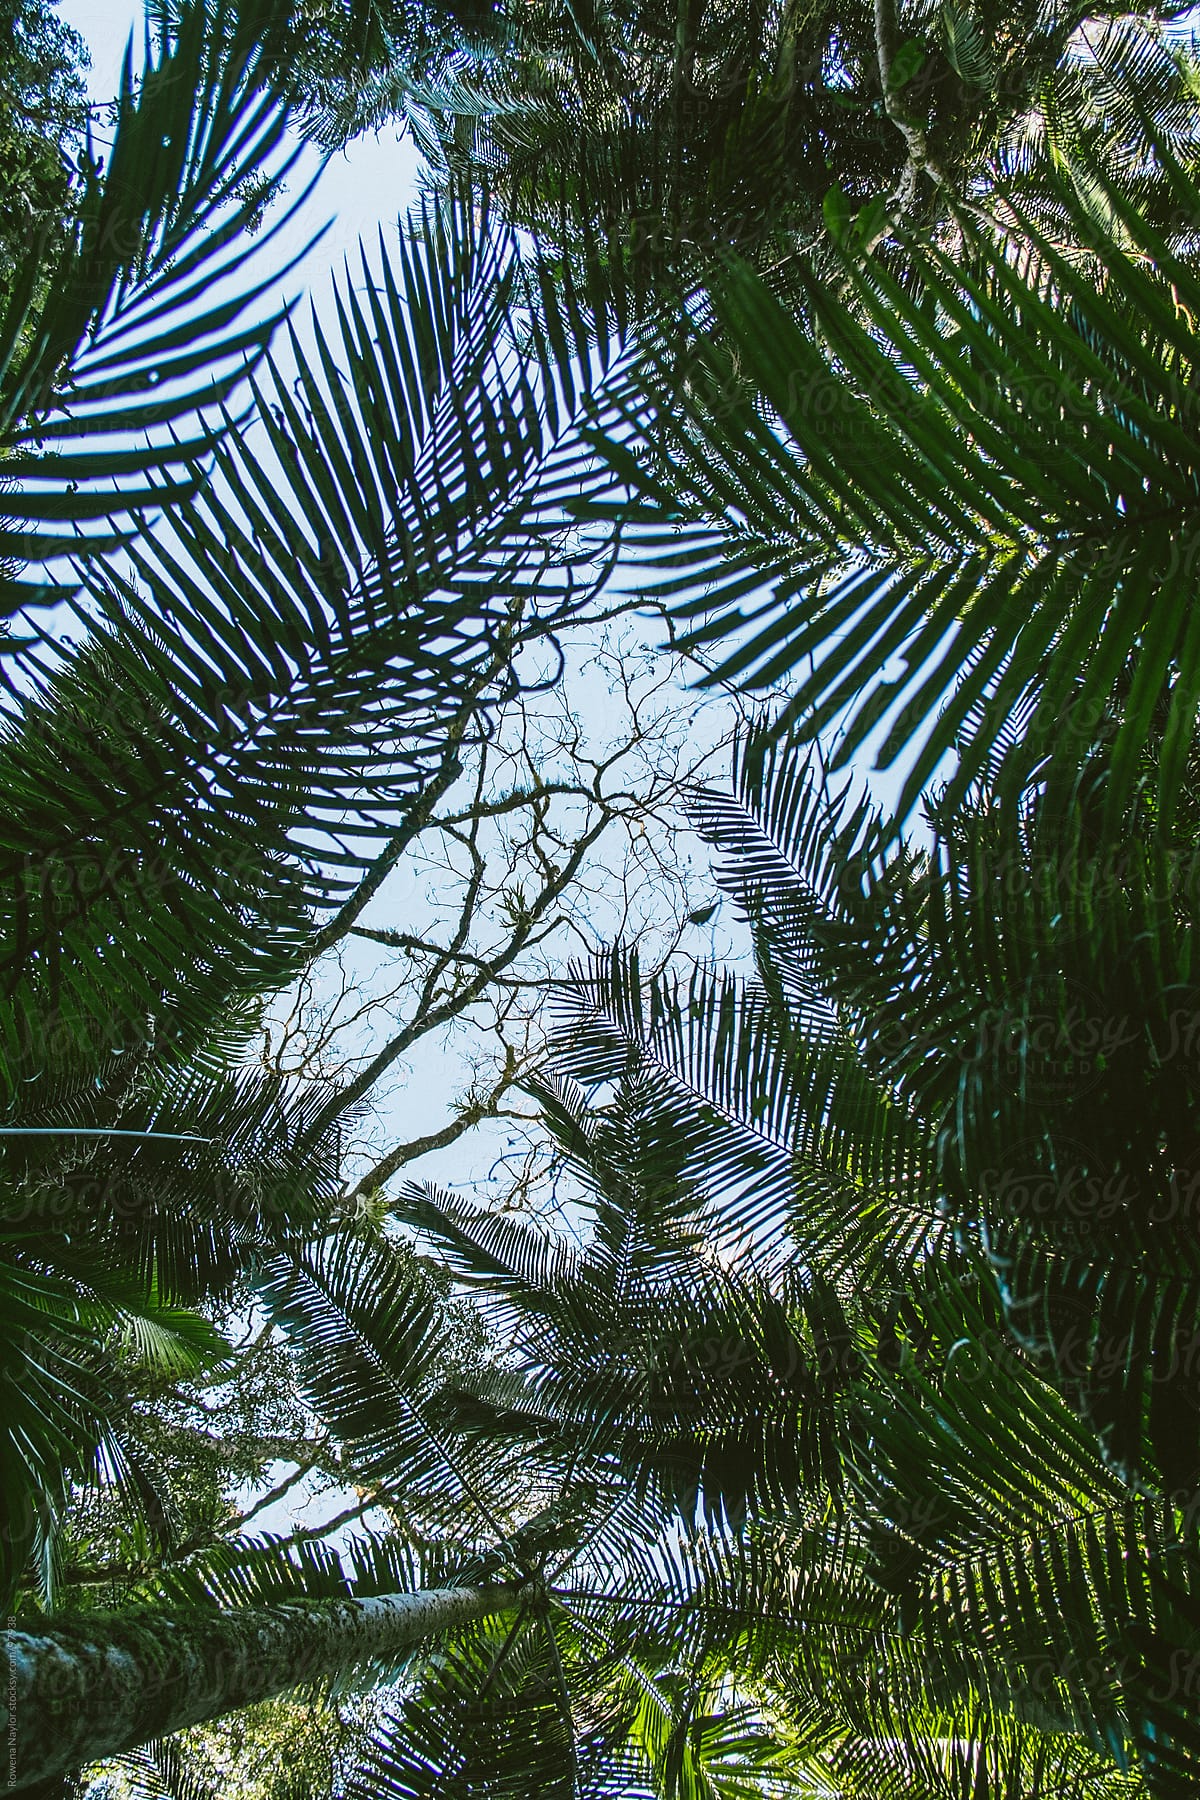 Large Ferns inl Rain Forest